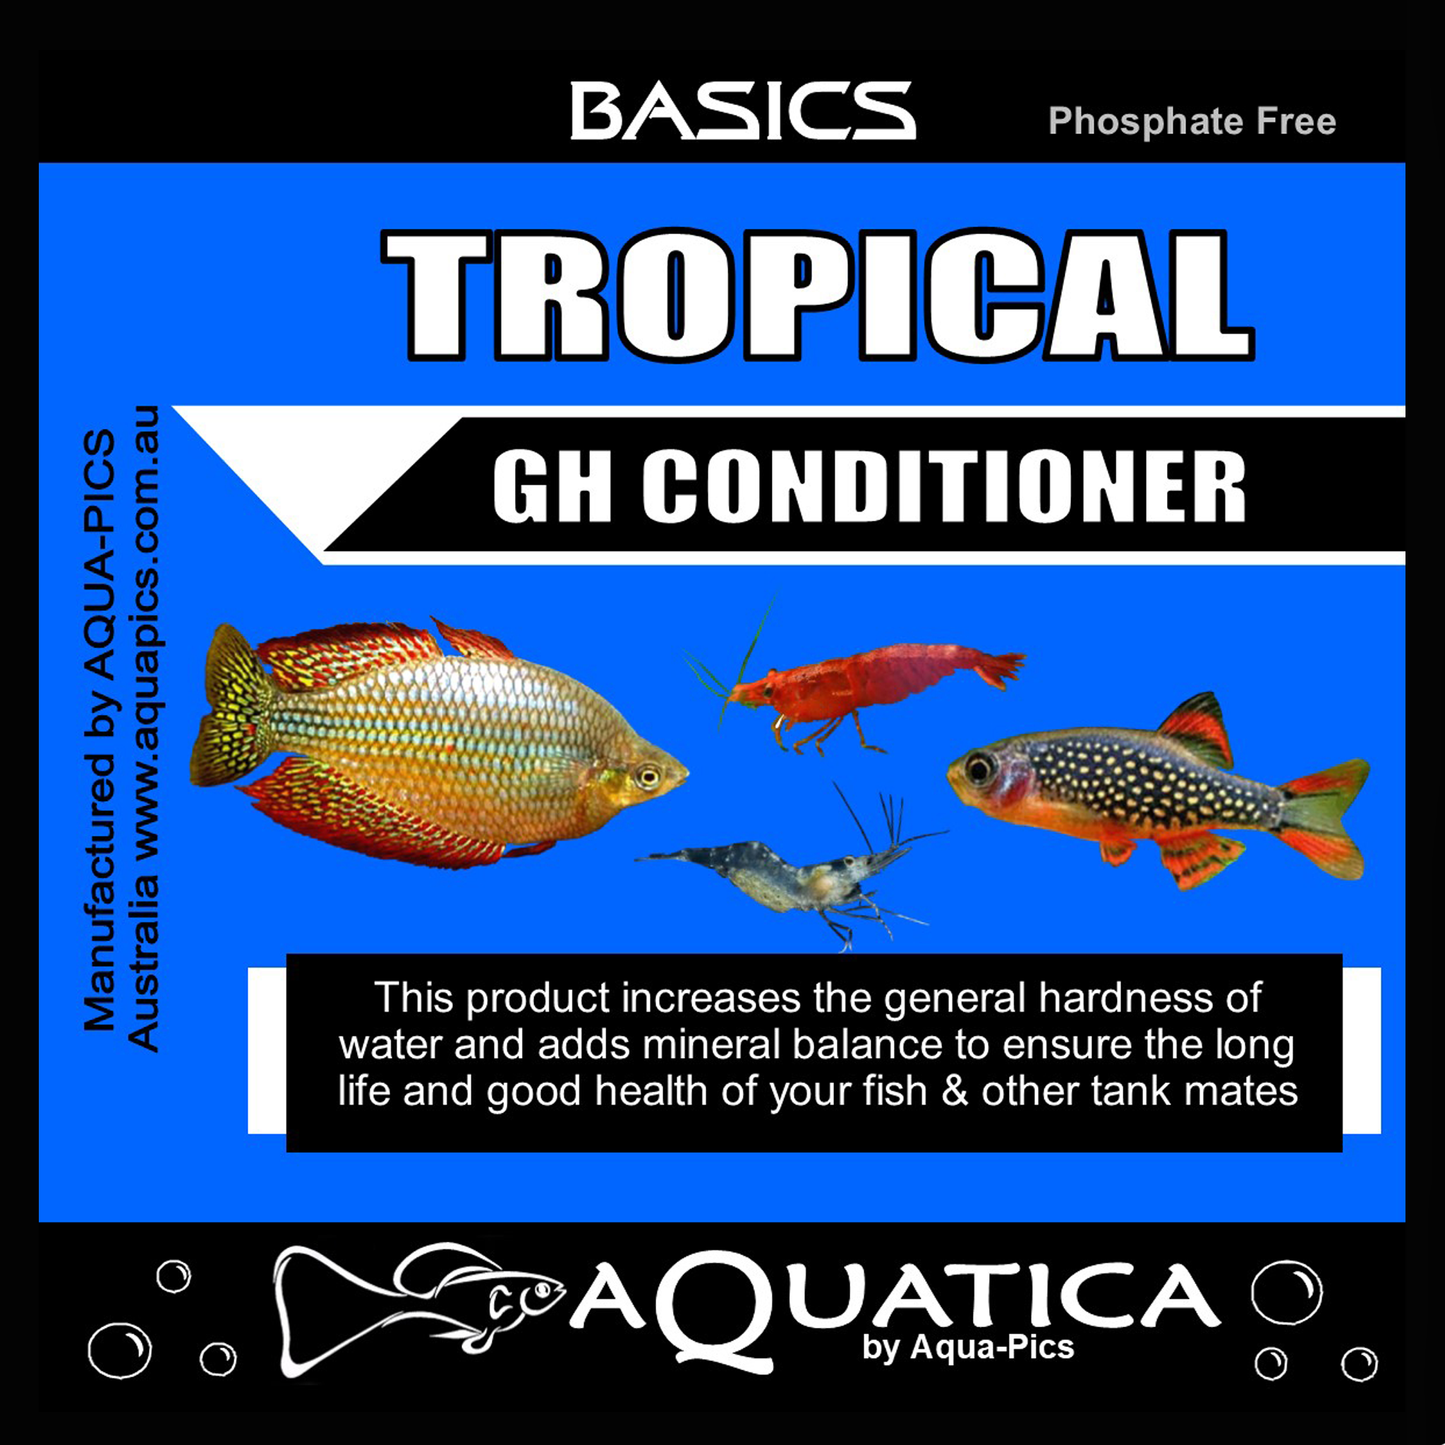 Aquatica Basics Tropical GH Conditioner 250g bag